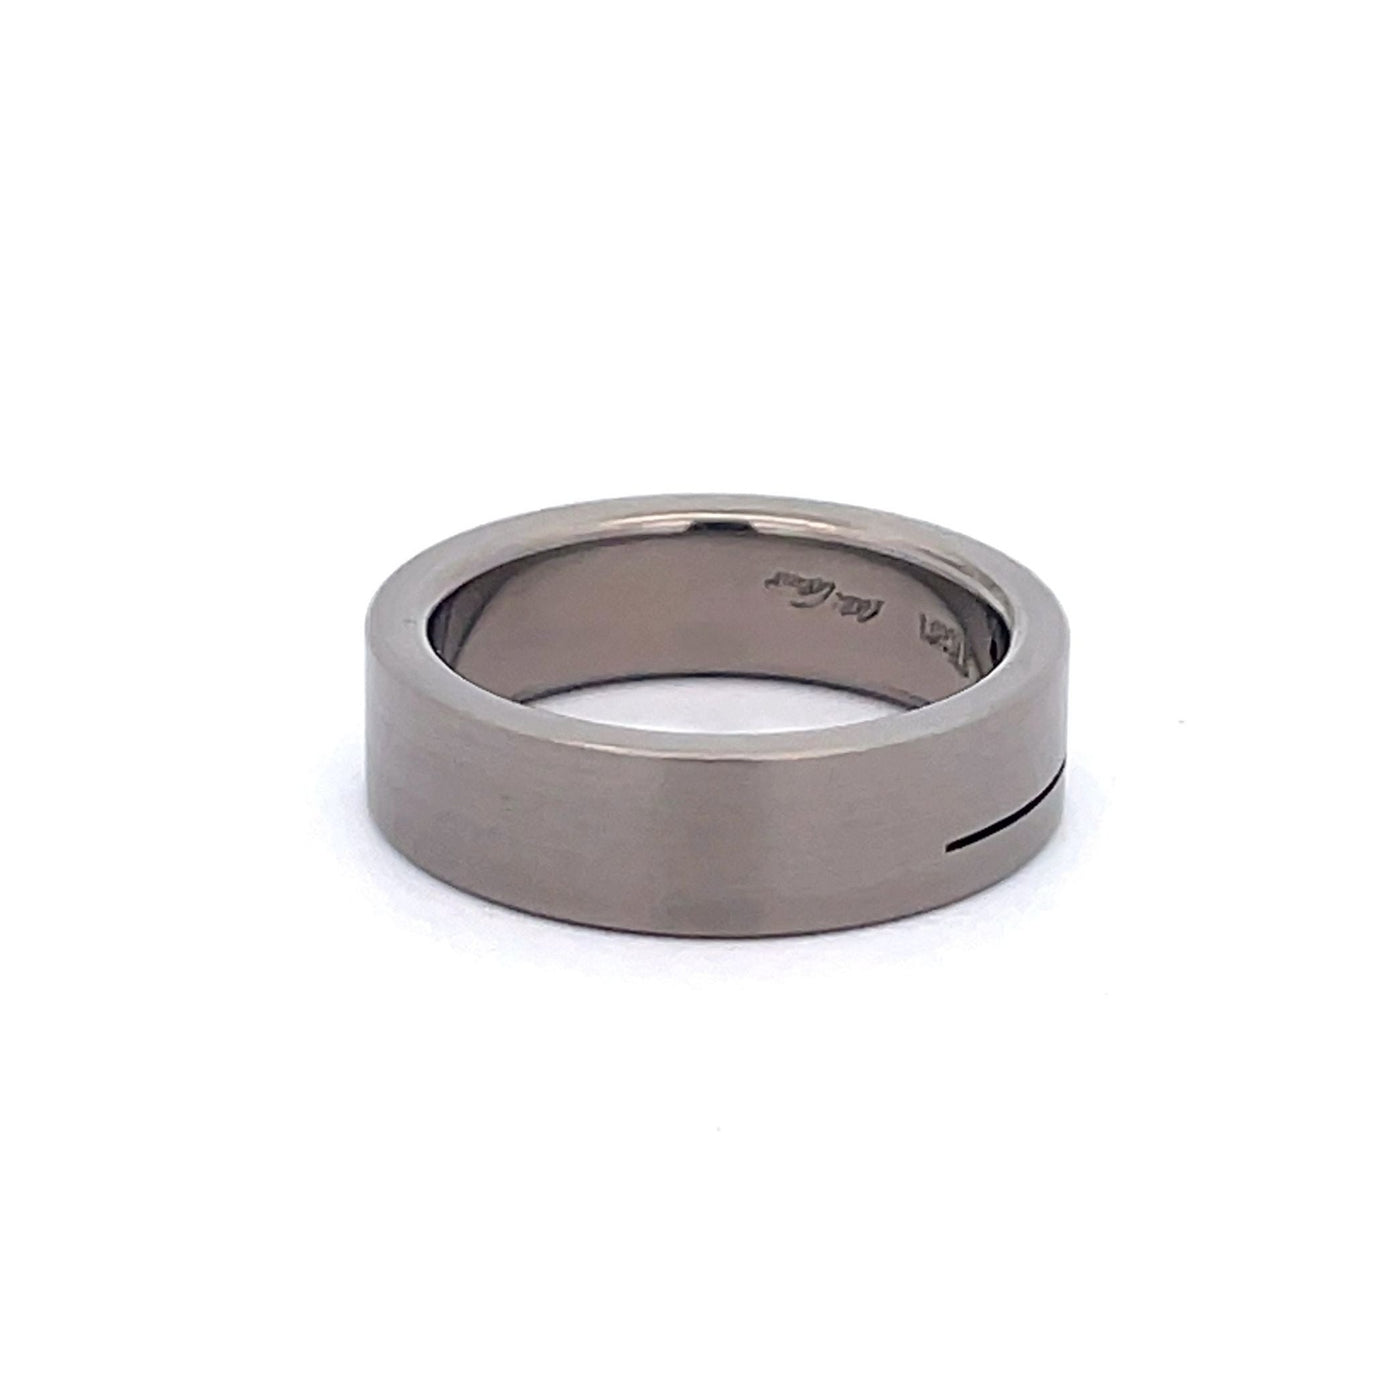 Titanium Ring with Incised Line & Diamonds Size M 1/2